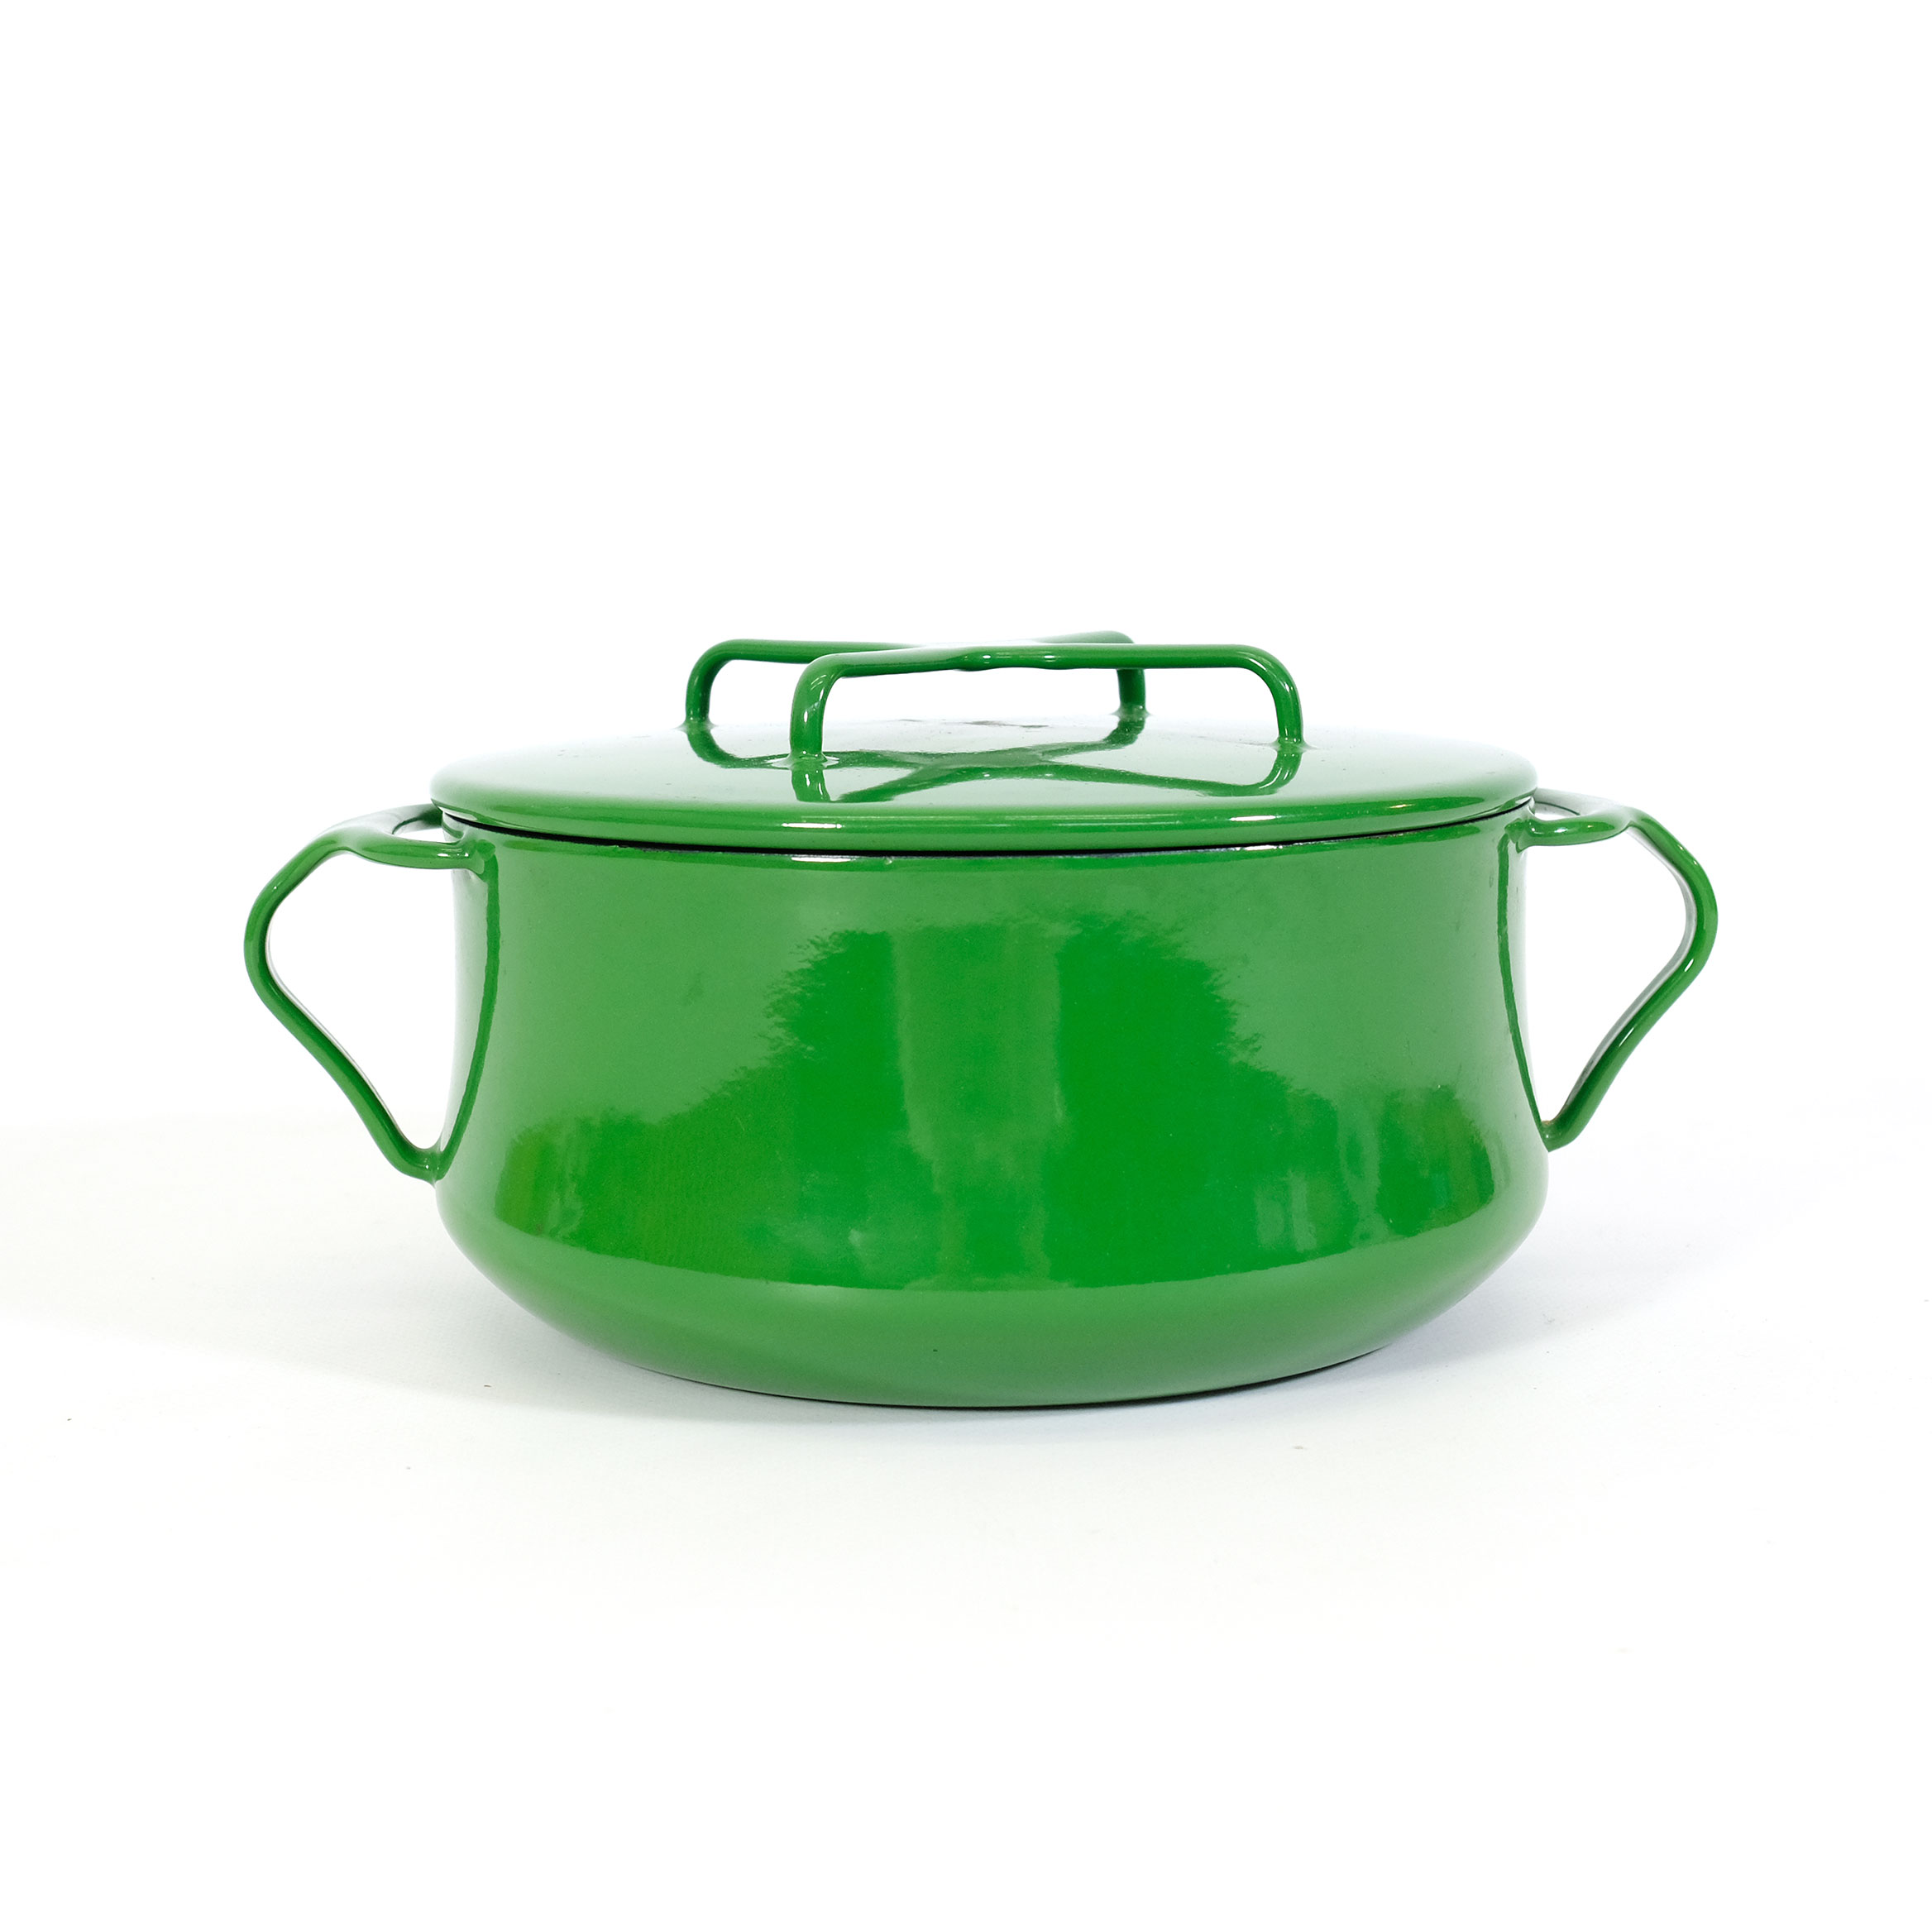 Kobenstyle green cooking pot by Dansk.